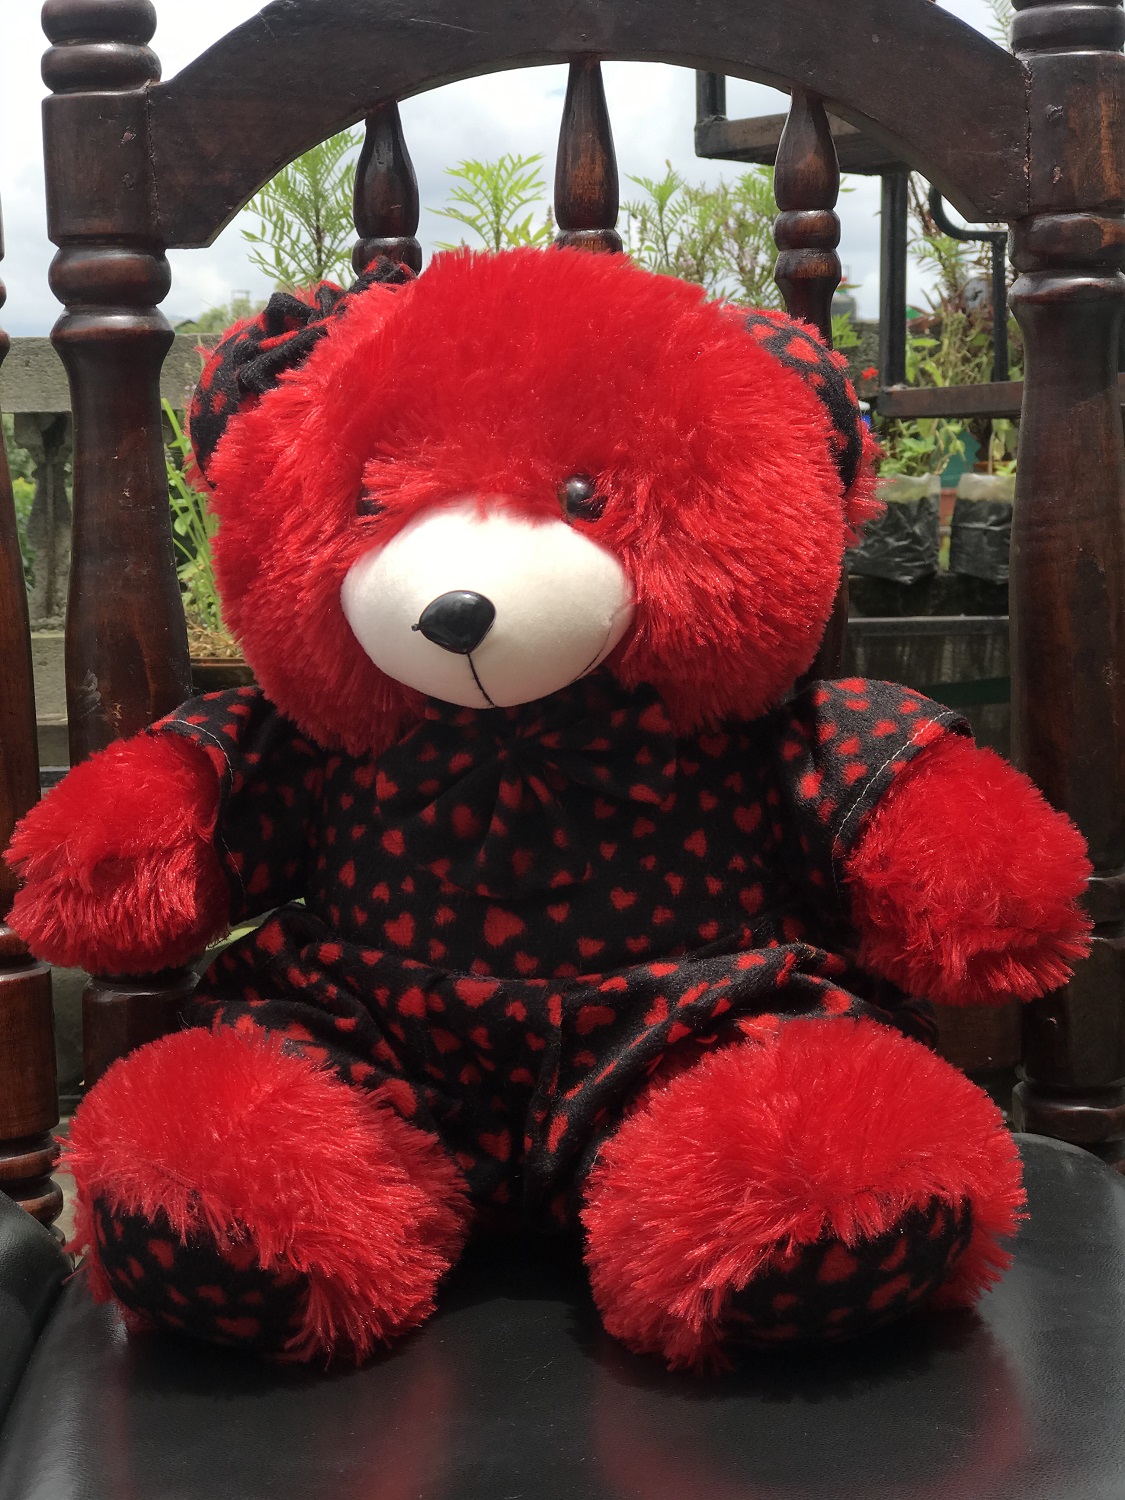 teddy bear price in bhatbhateni